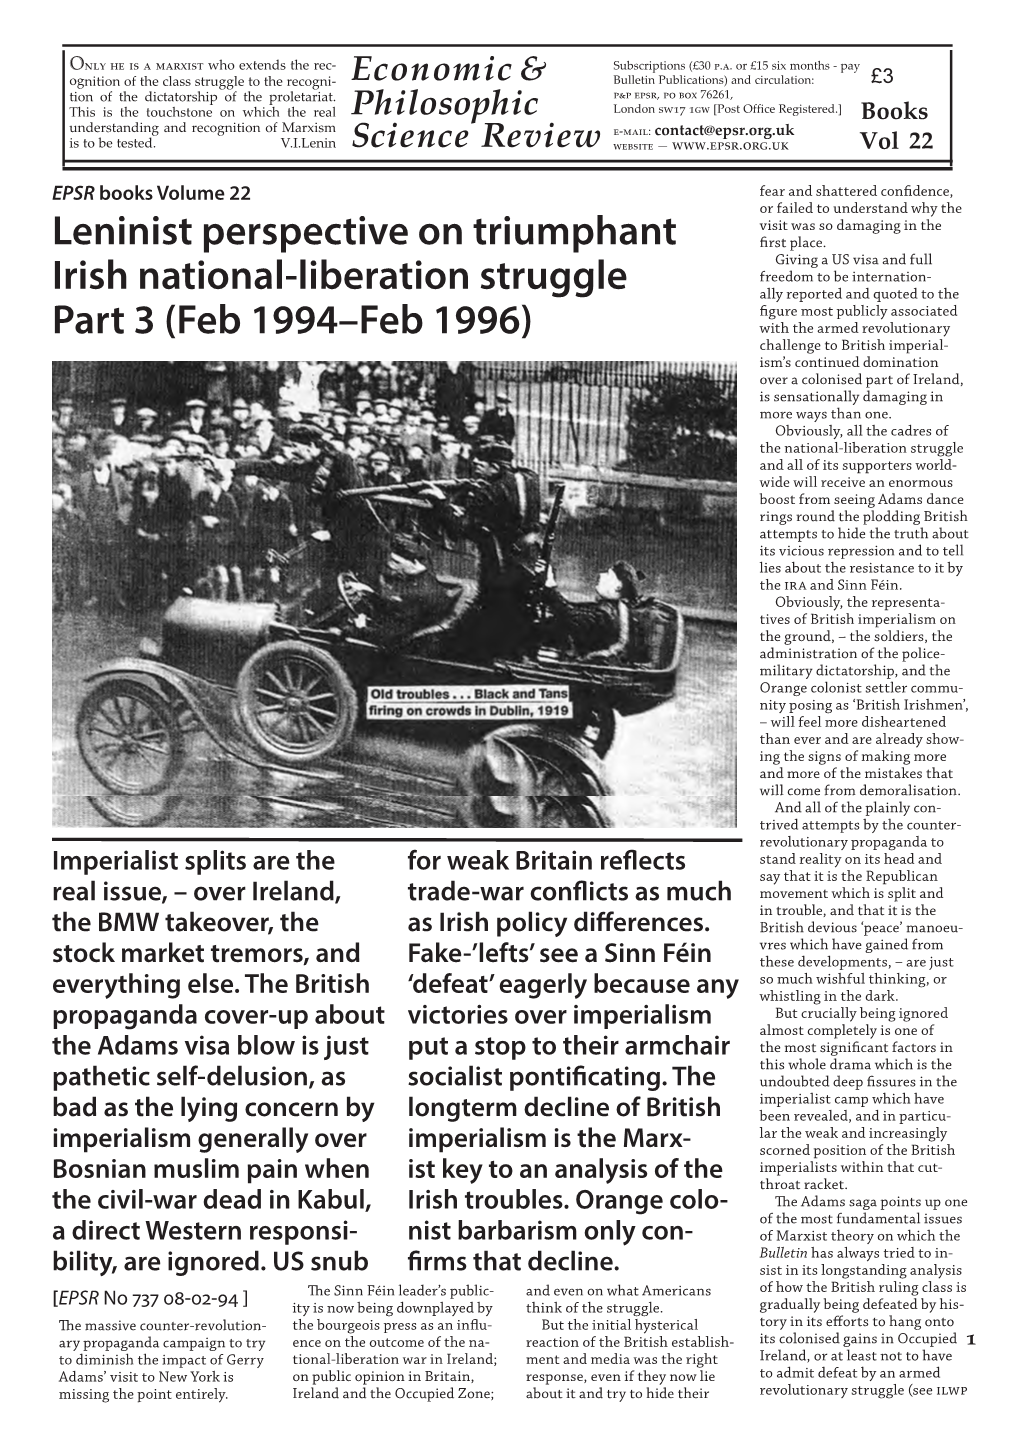 Leninist Perspective on Triumphant Irish National-Liberation Struggle